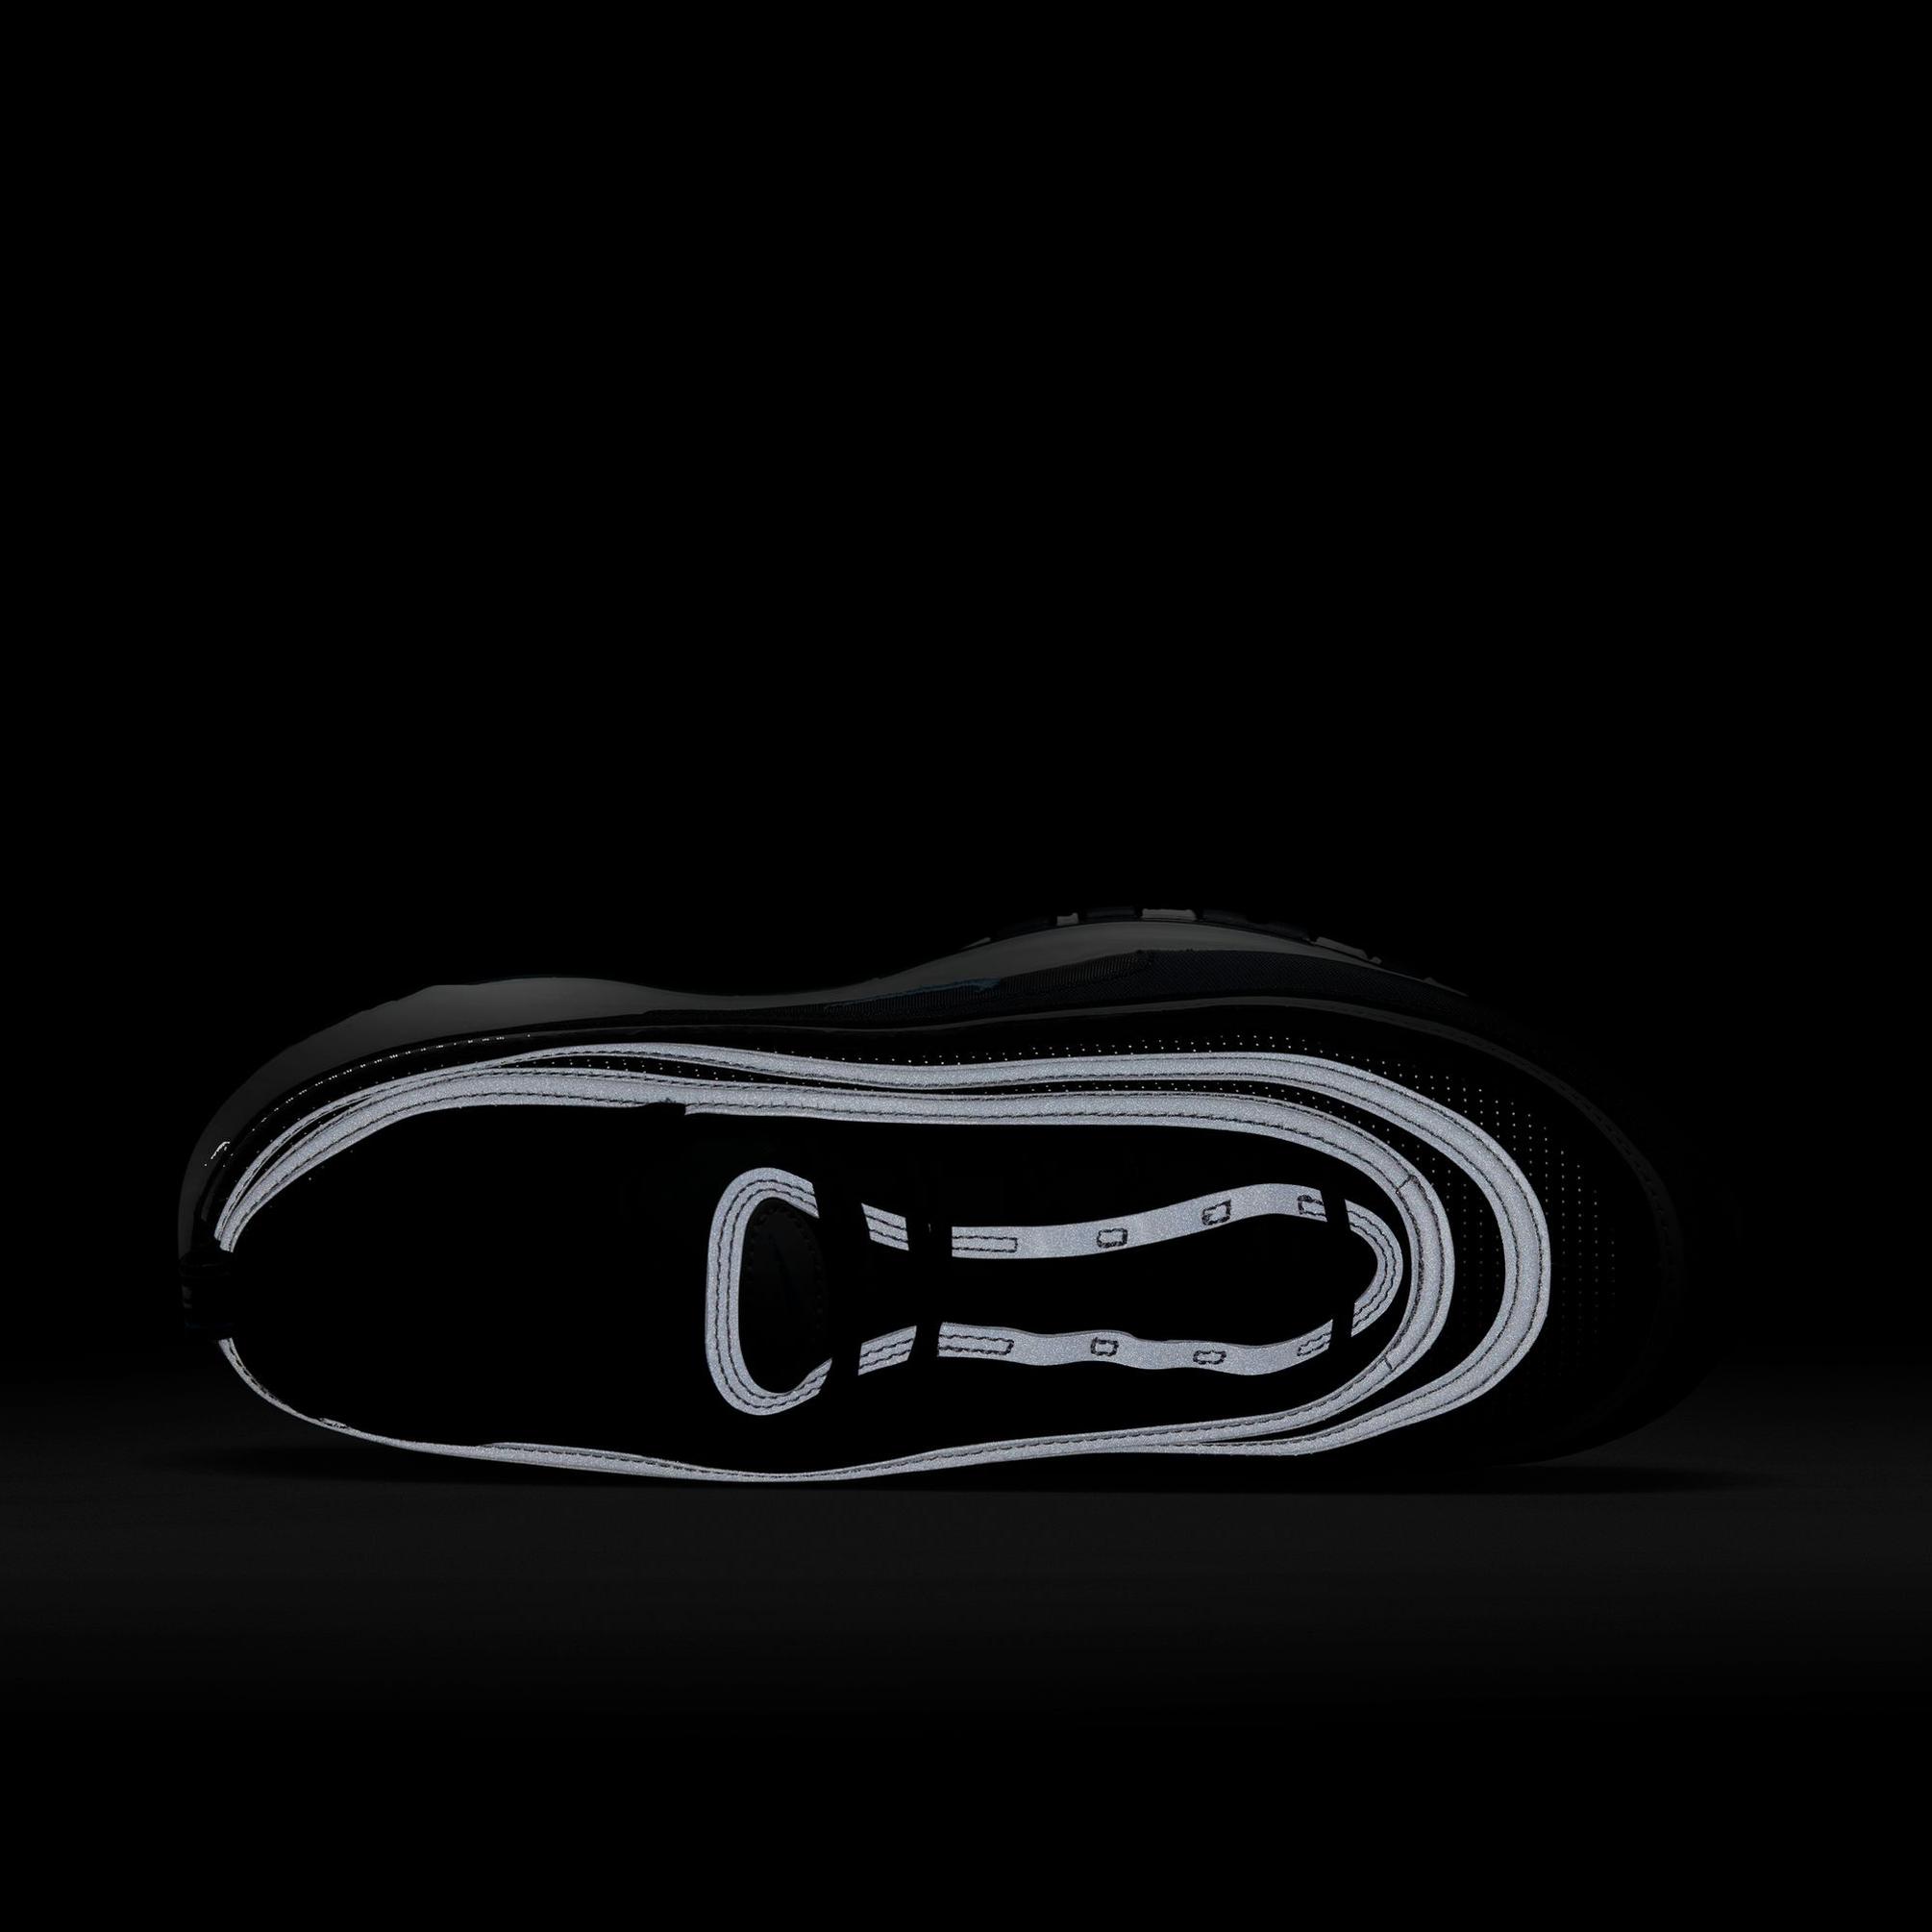  Nike Air Max 97 Erkek Siyah Spor Ayakkabı